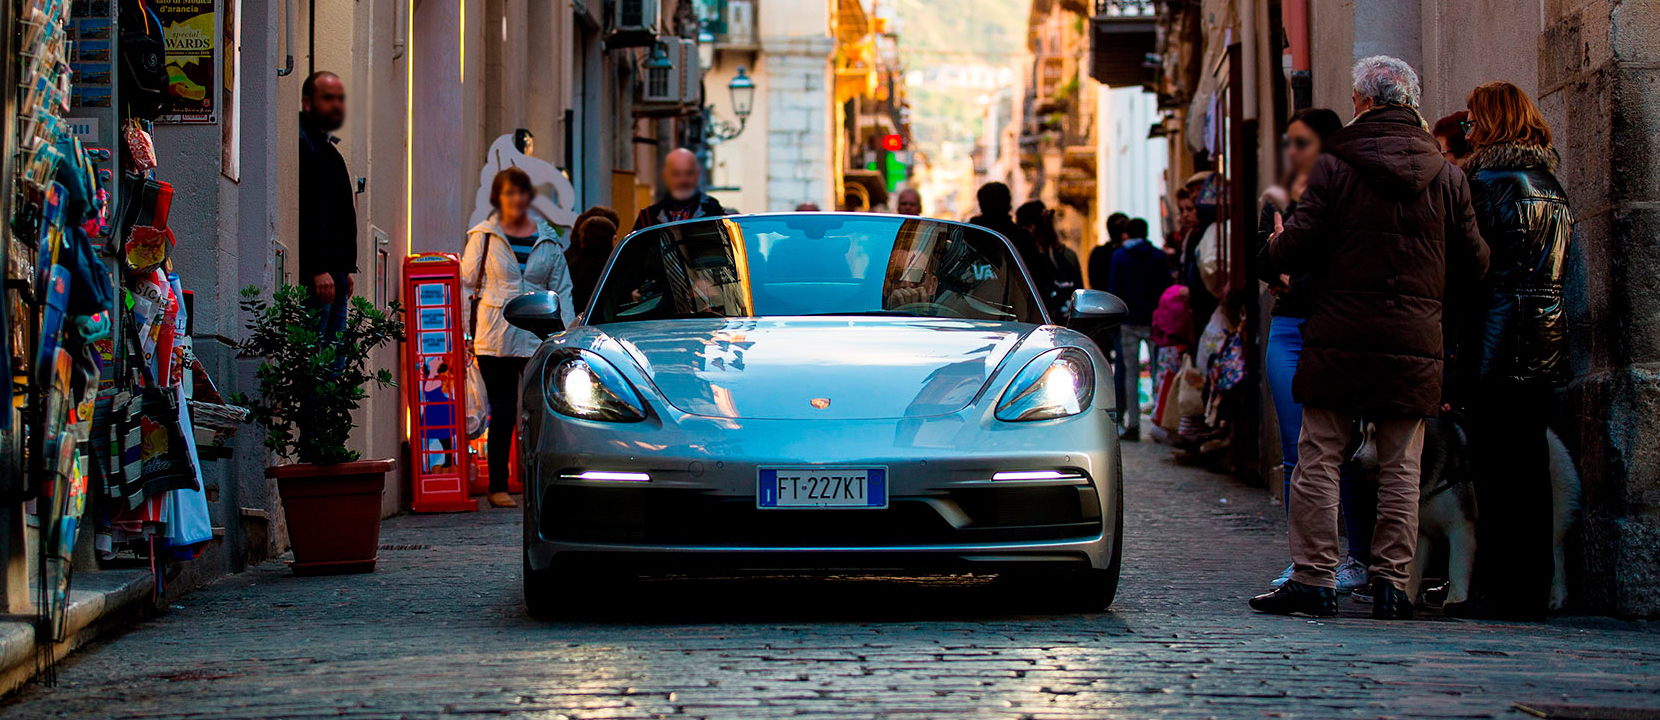 3 Day Self drive Porsche Cefalù Tour, Sicily / Italy - August 